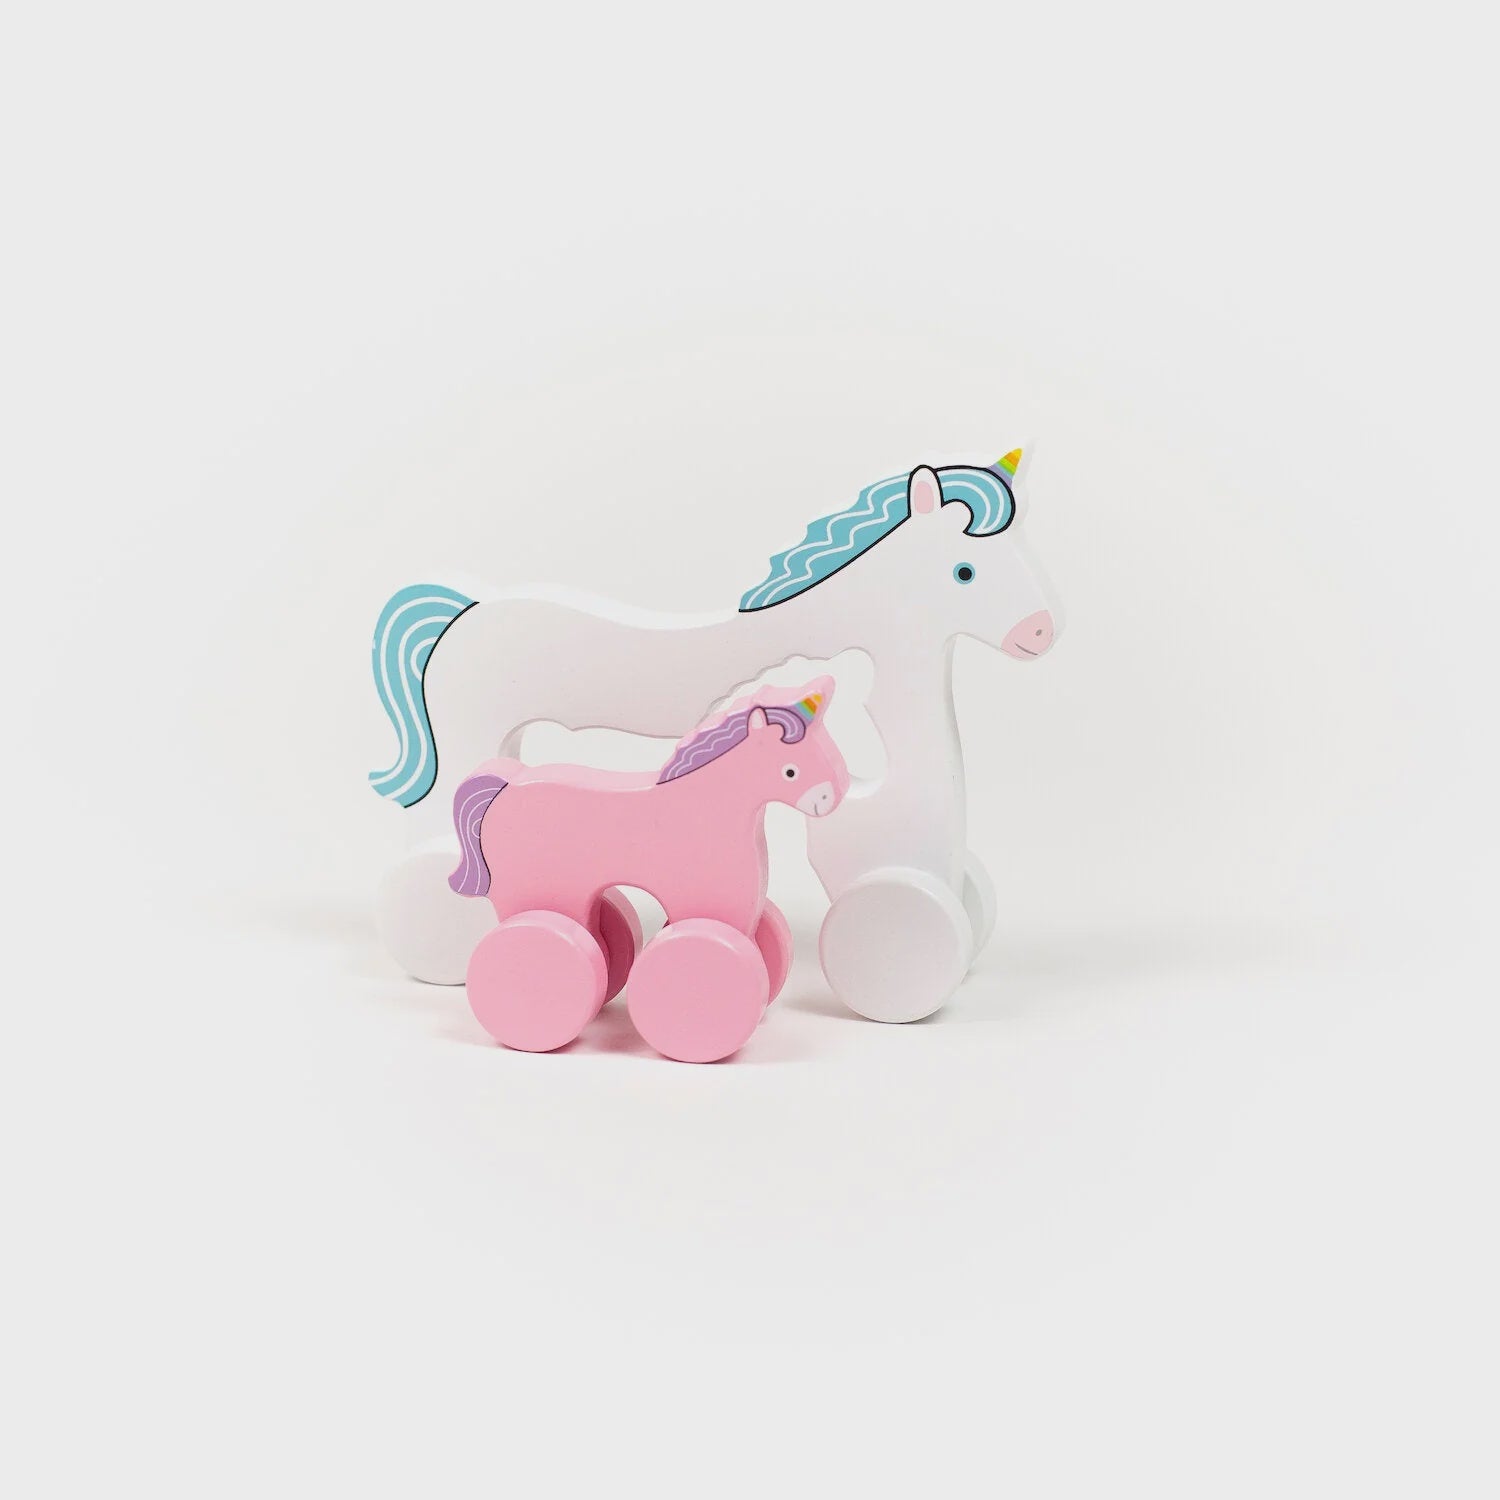 Big & Little Wooden Push Toy - Unicorn